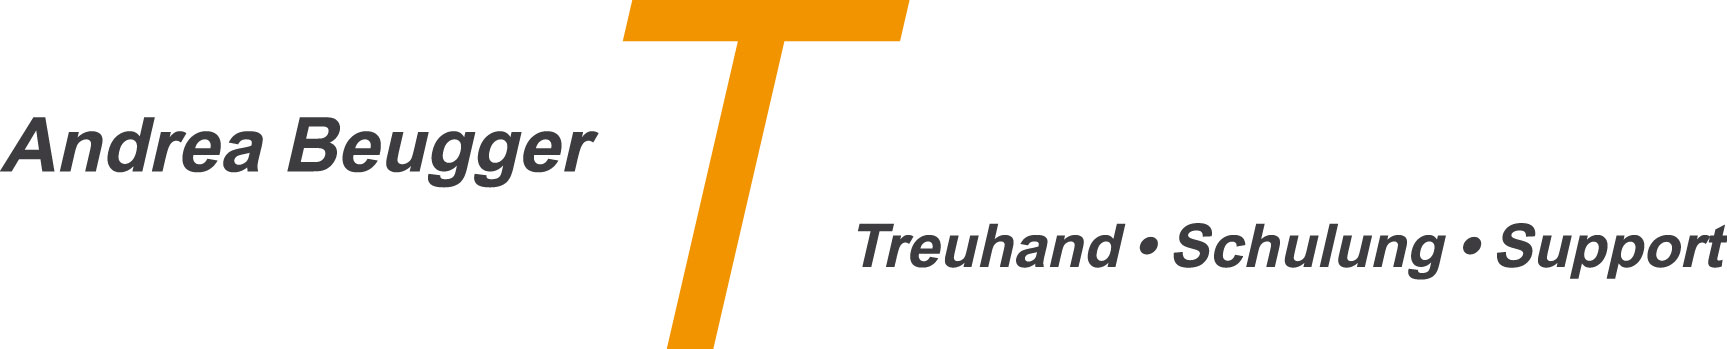 Beugger Treuhand Logo